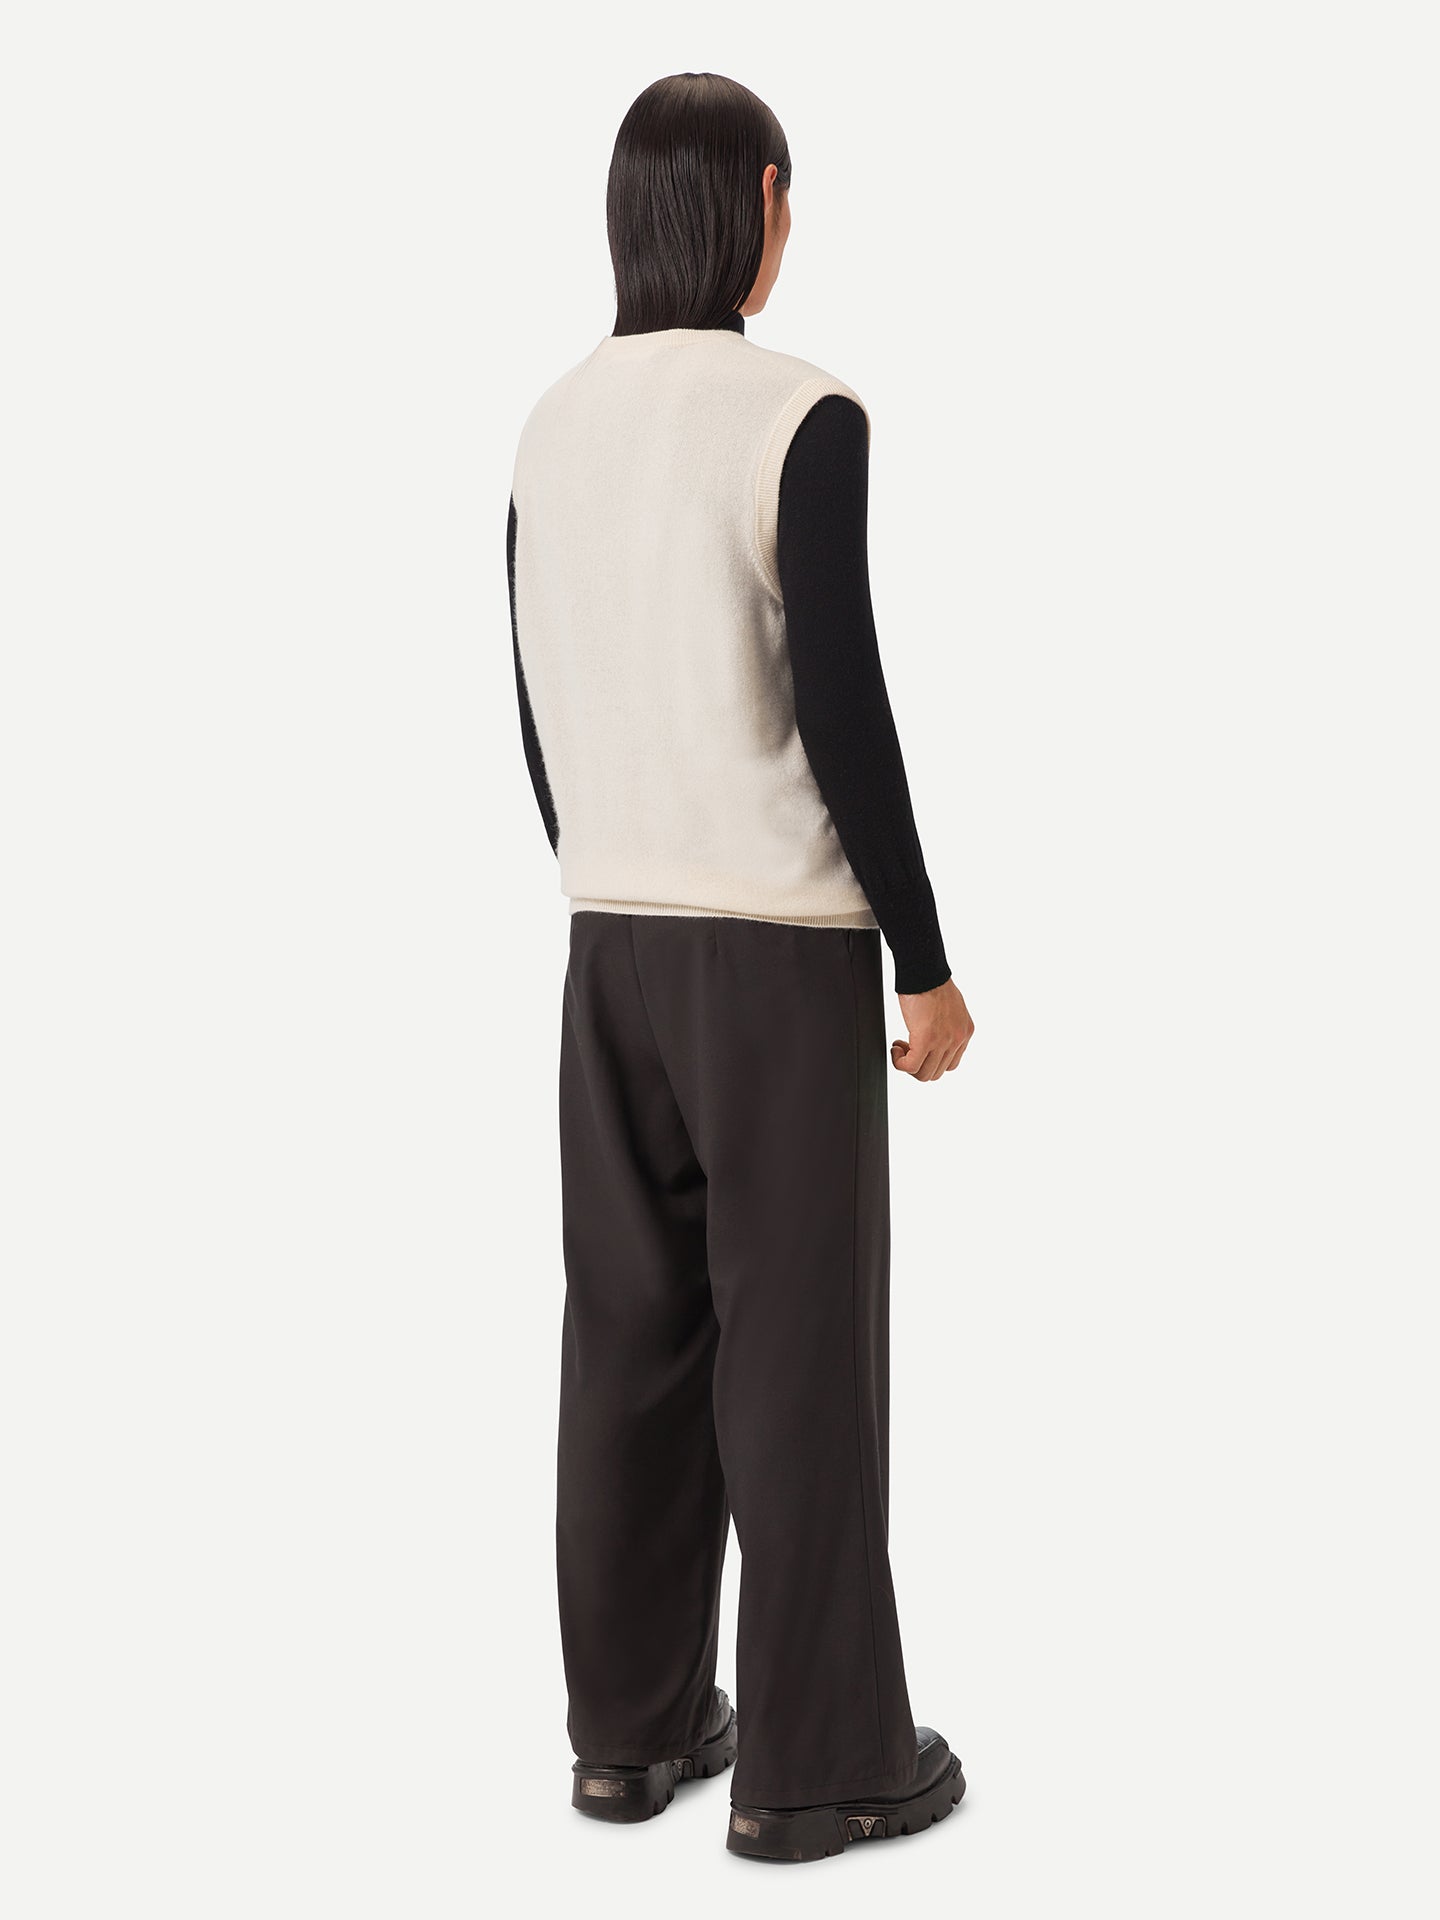 Men's Cashmere Vest Off White - Gobi Cashmere